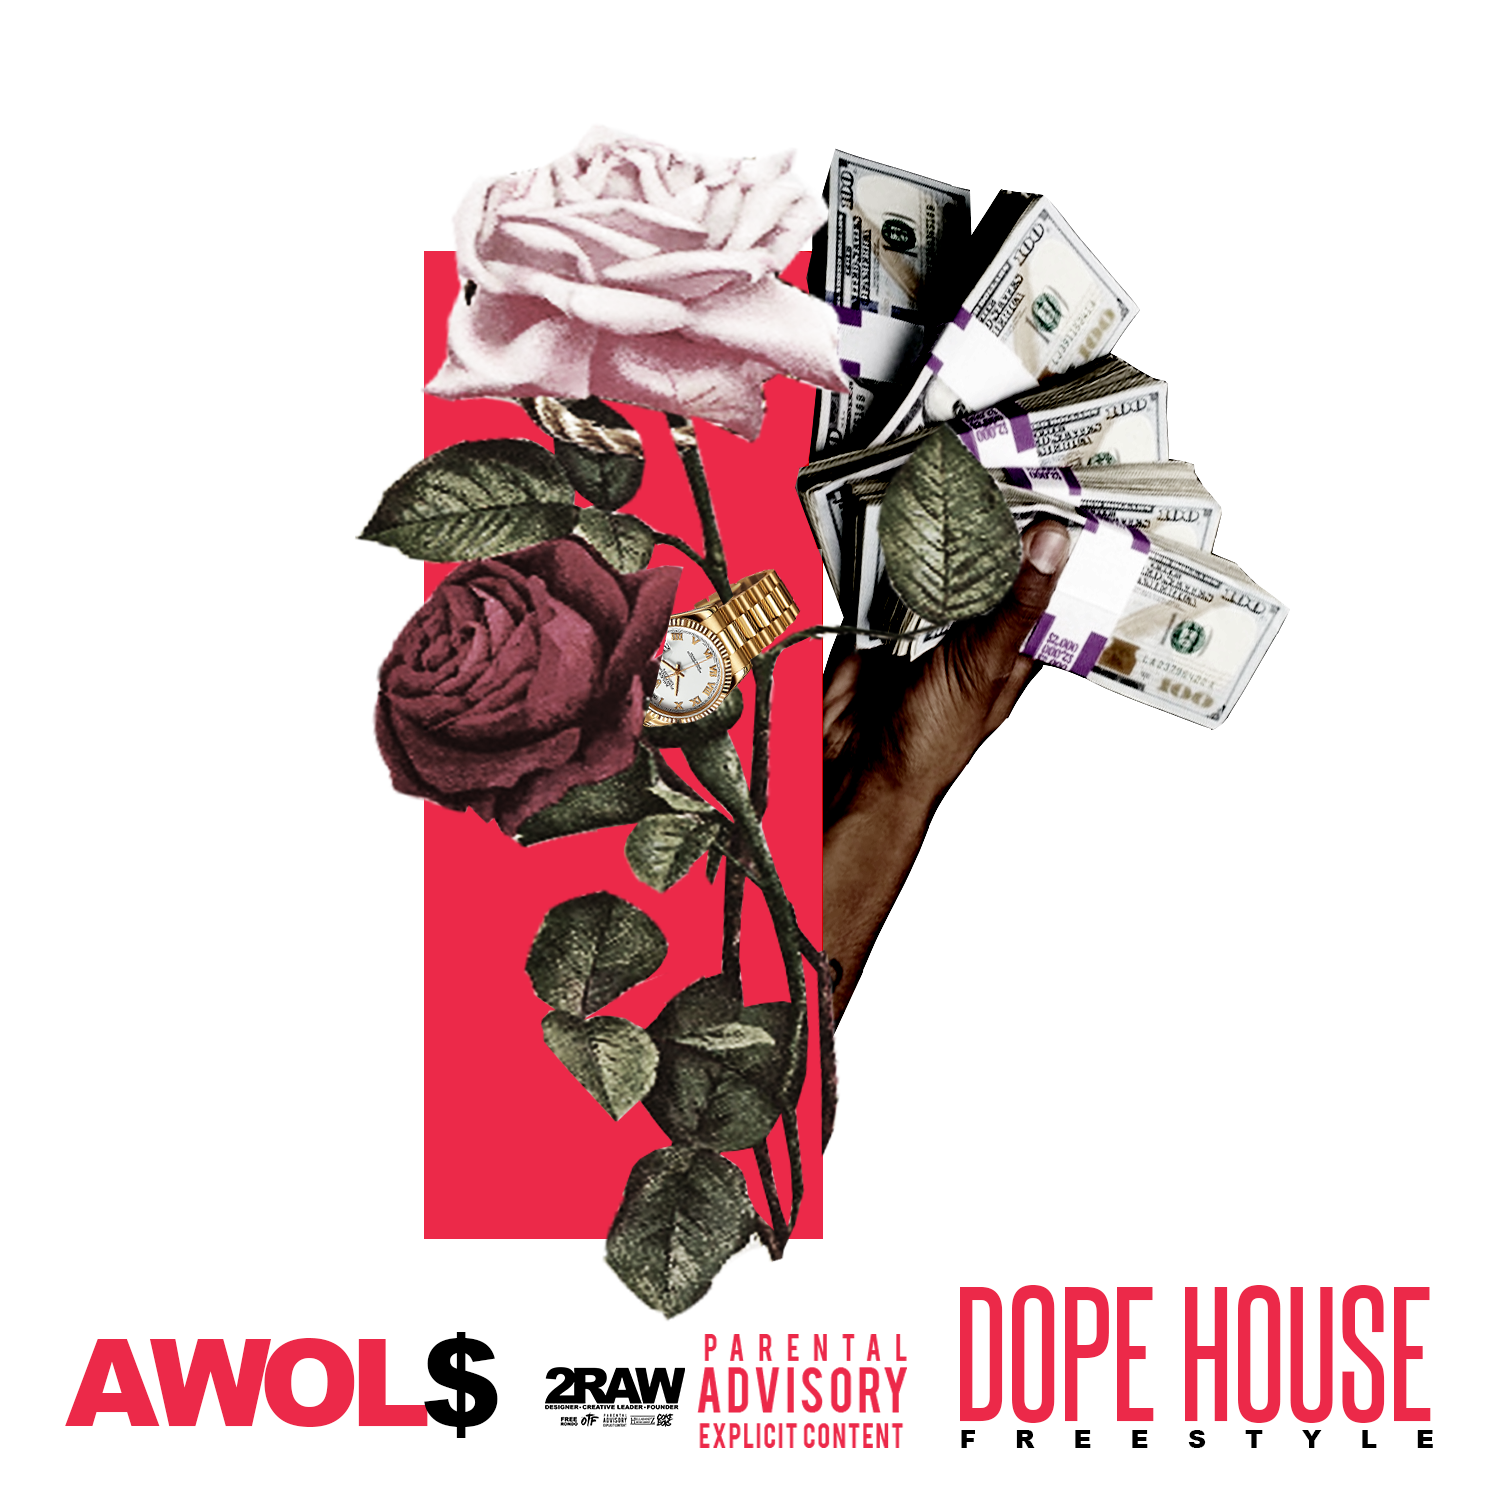 AWOL$: Dope House Freestyle